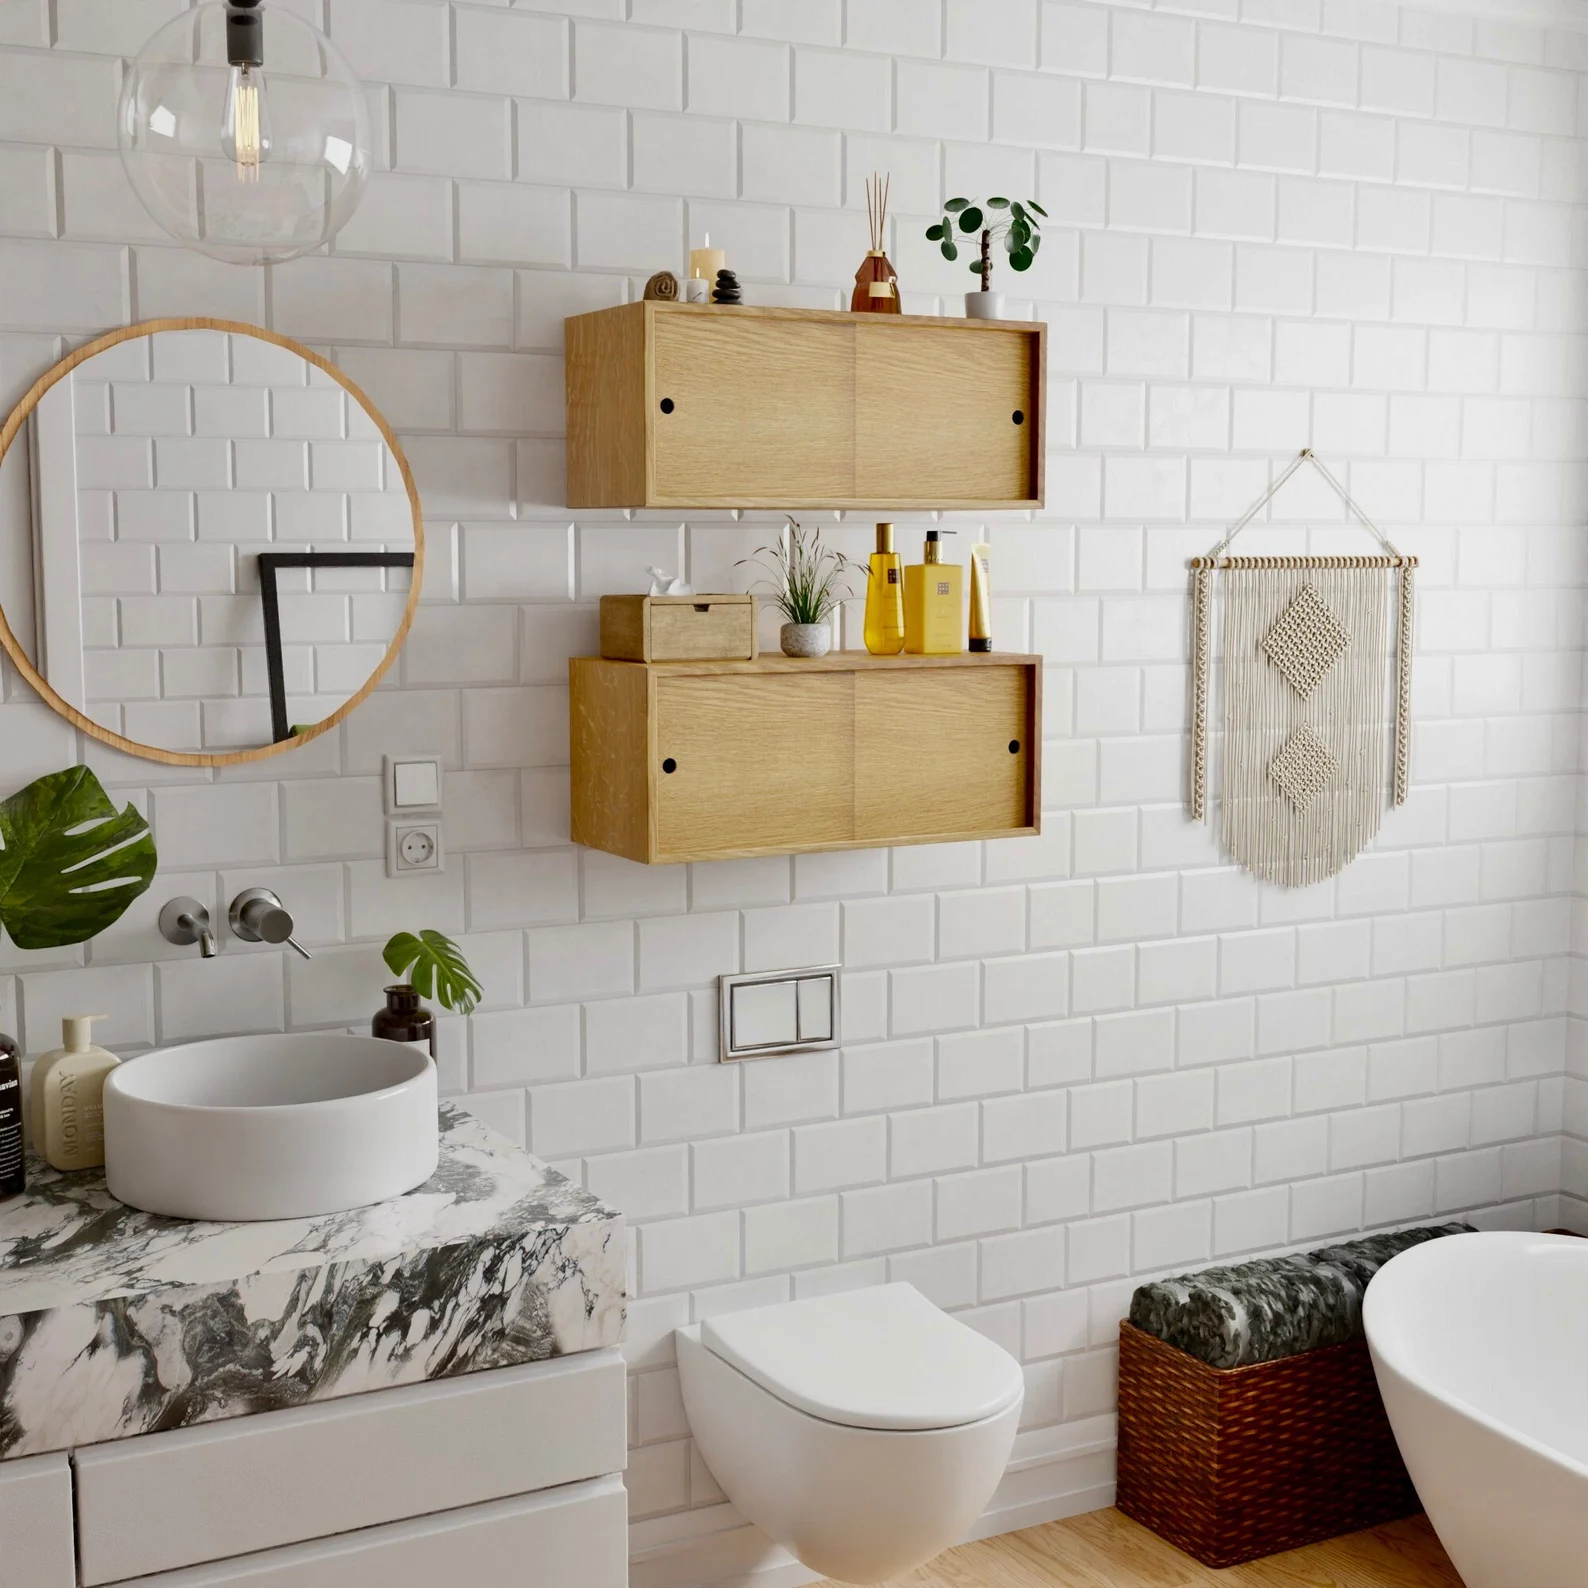 Efficient Ways to Maximize Bathroom Storage Space